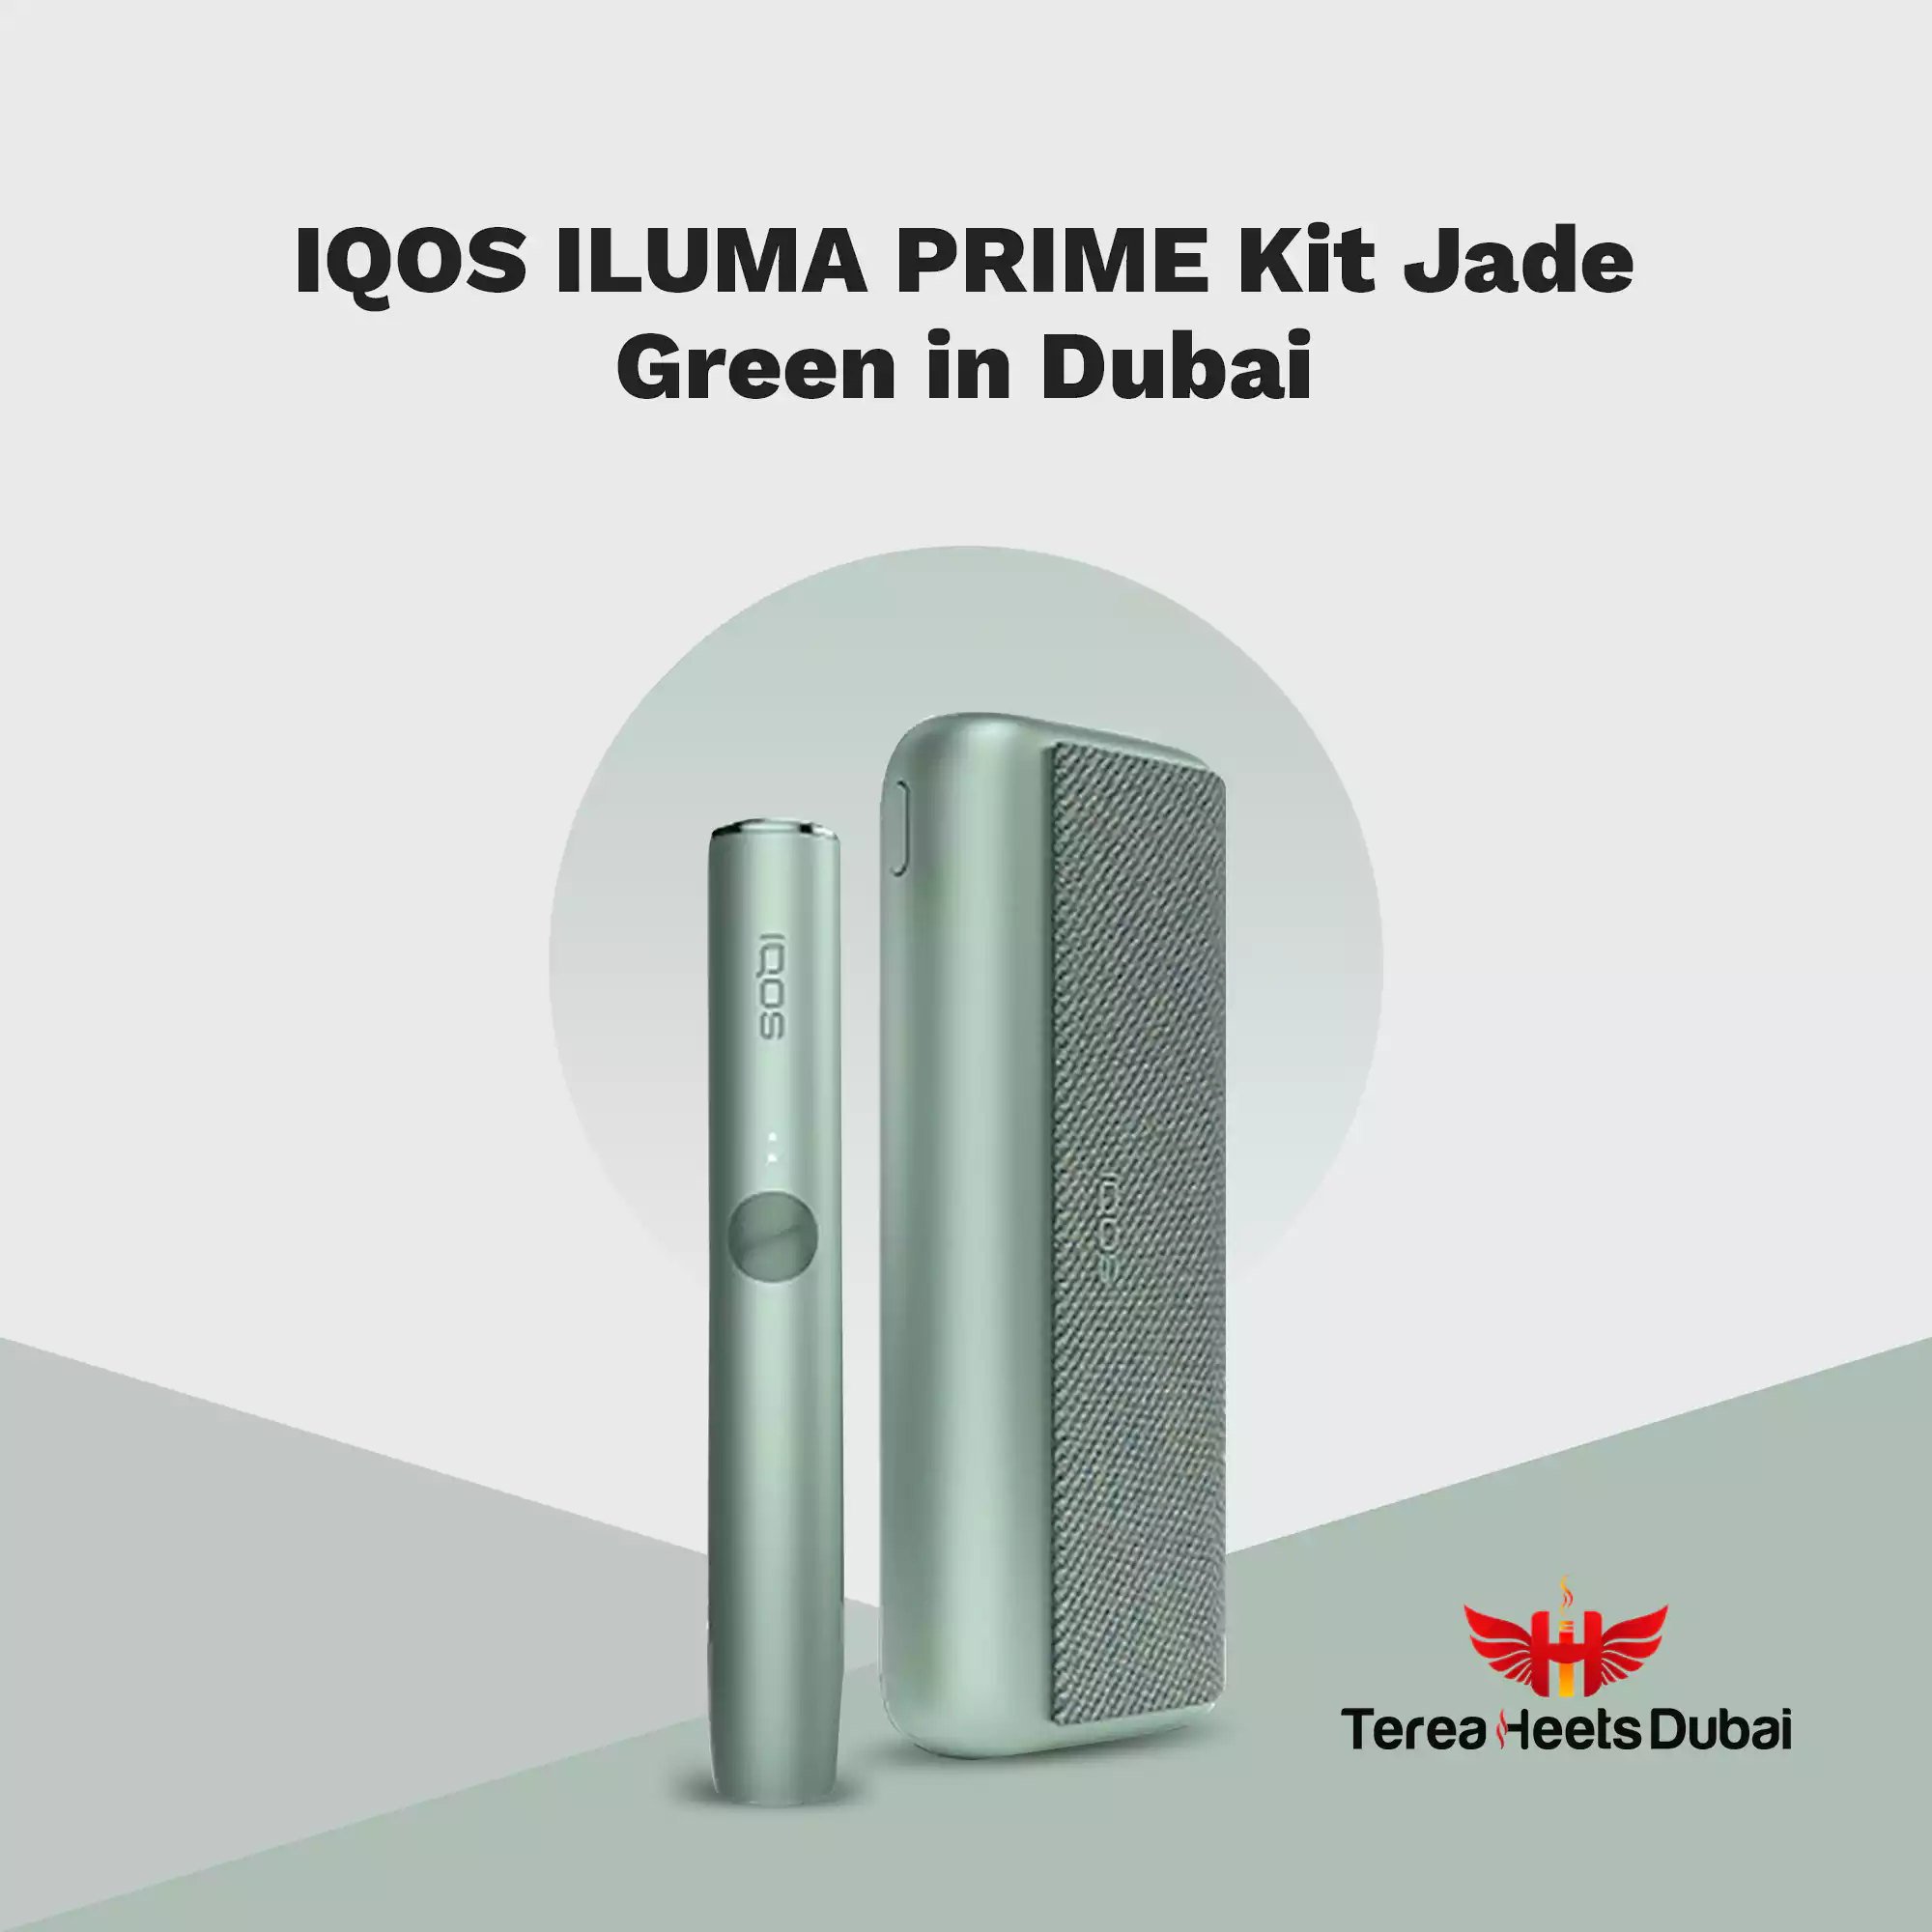 IQOS ILUMA PRIME Jade Green in Dubai